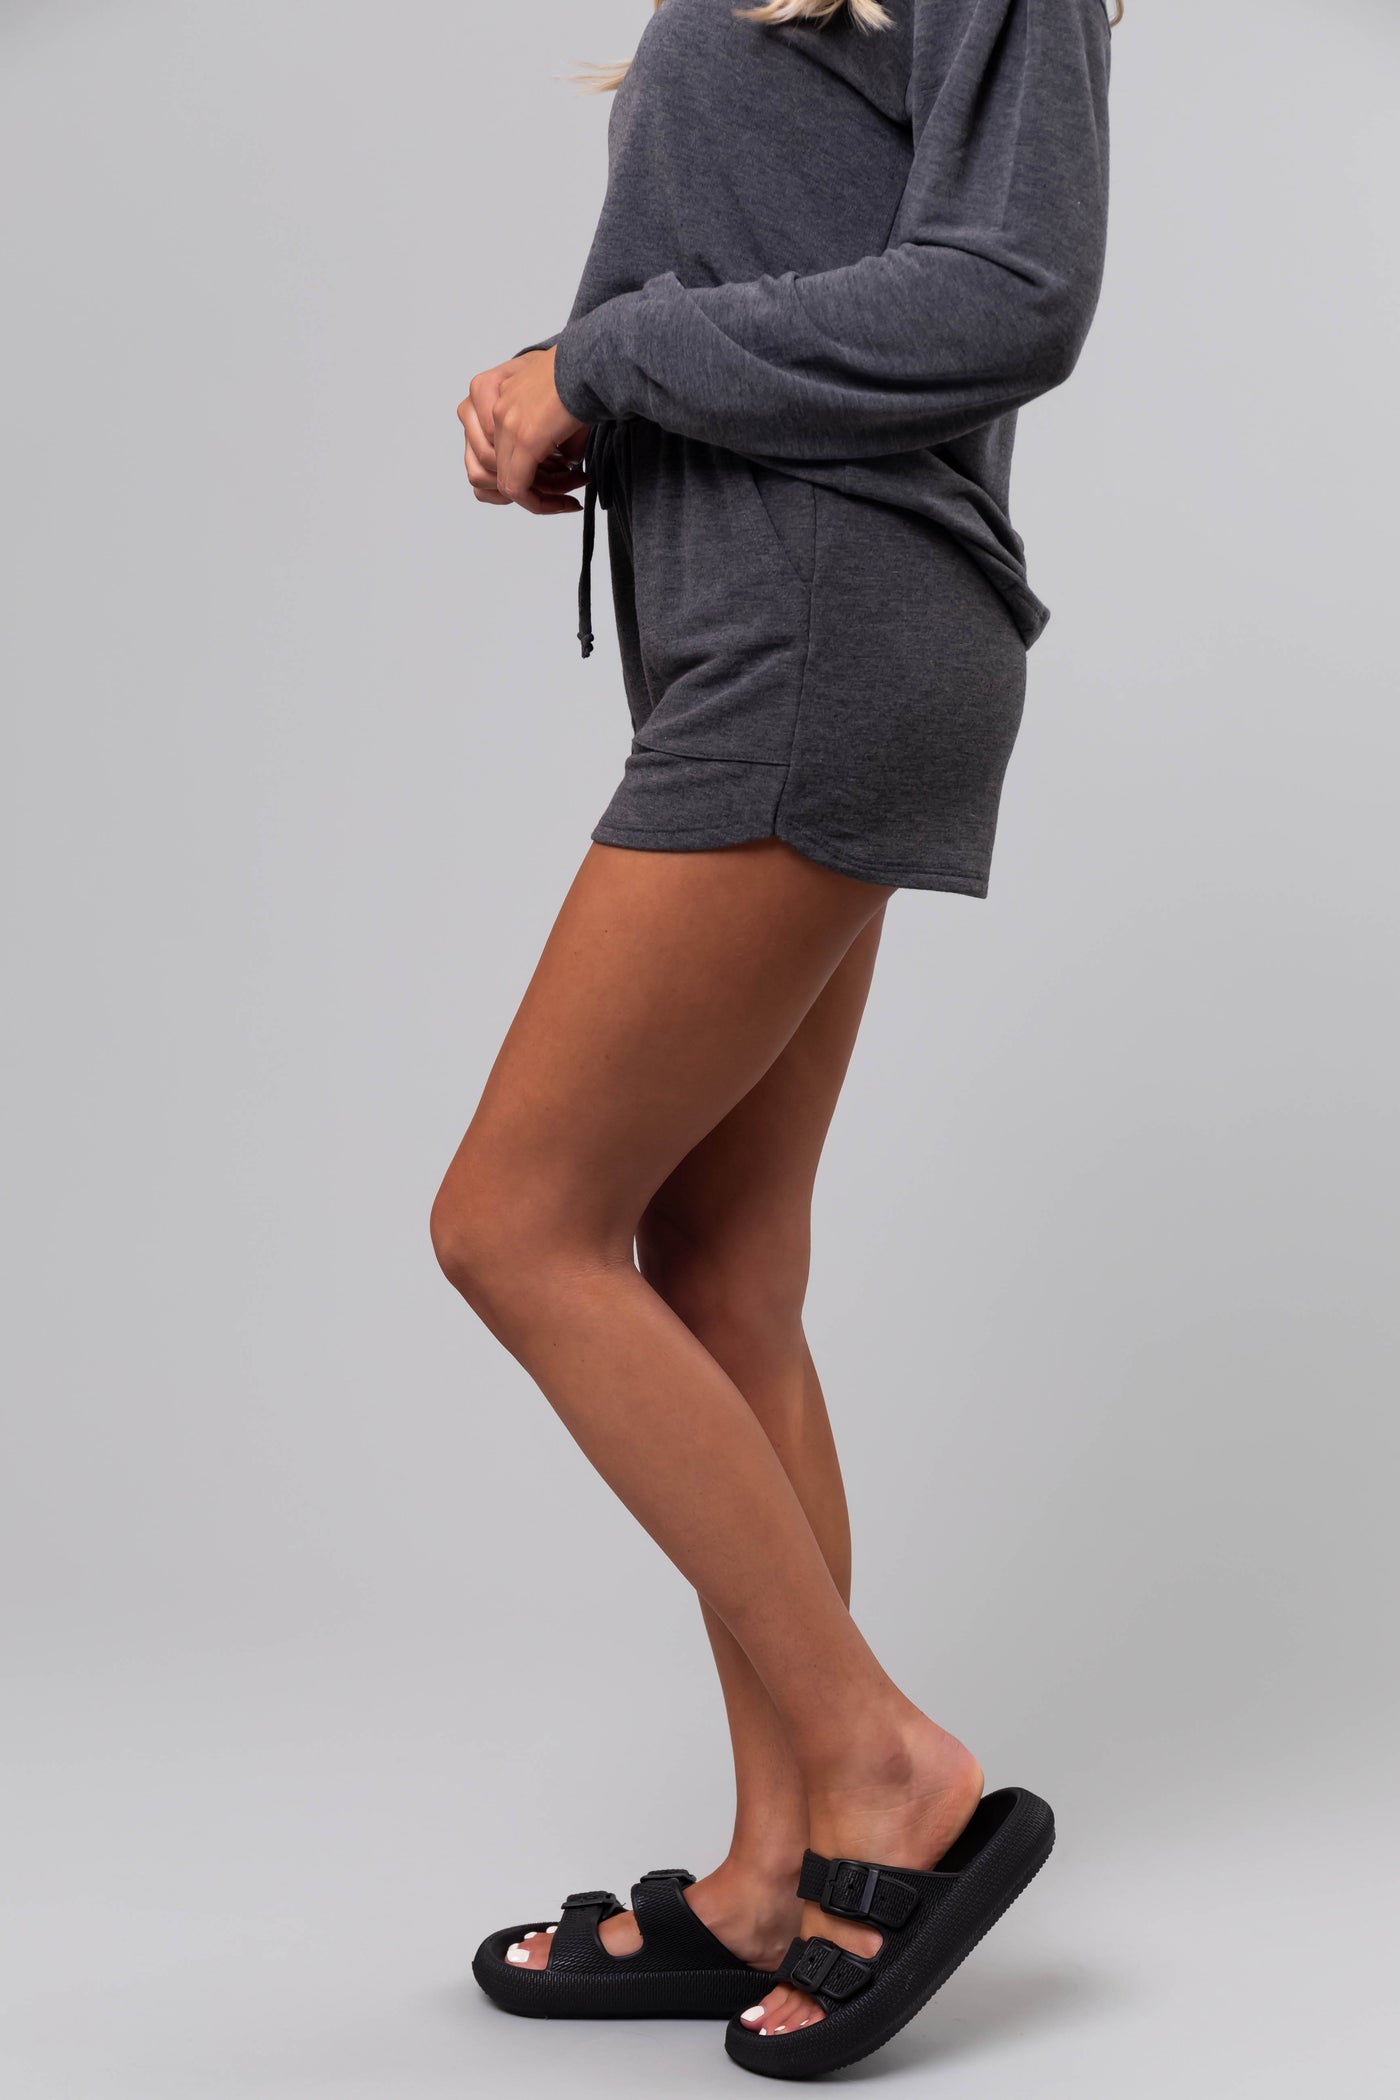 Heathered Charcoal Soft Knit Elastic Shorts